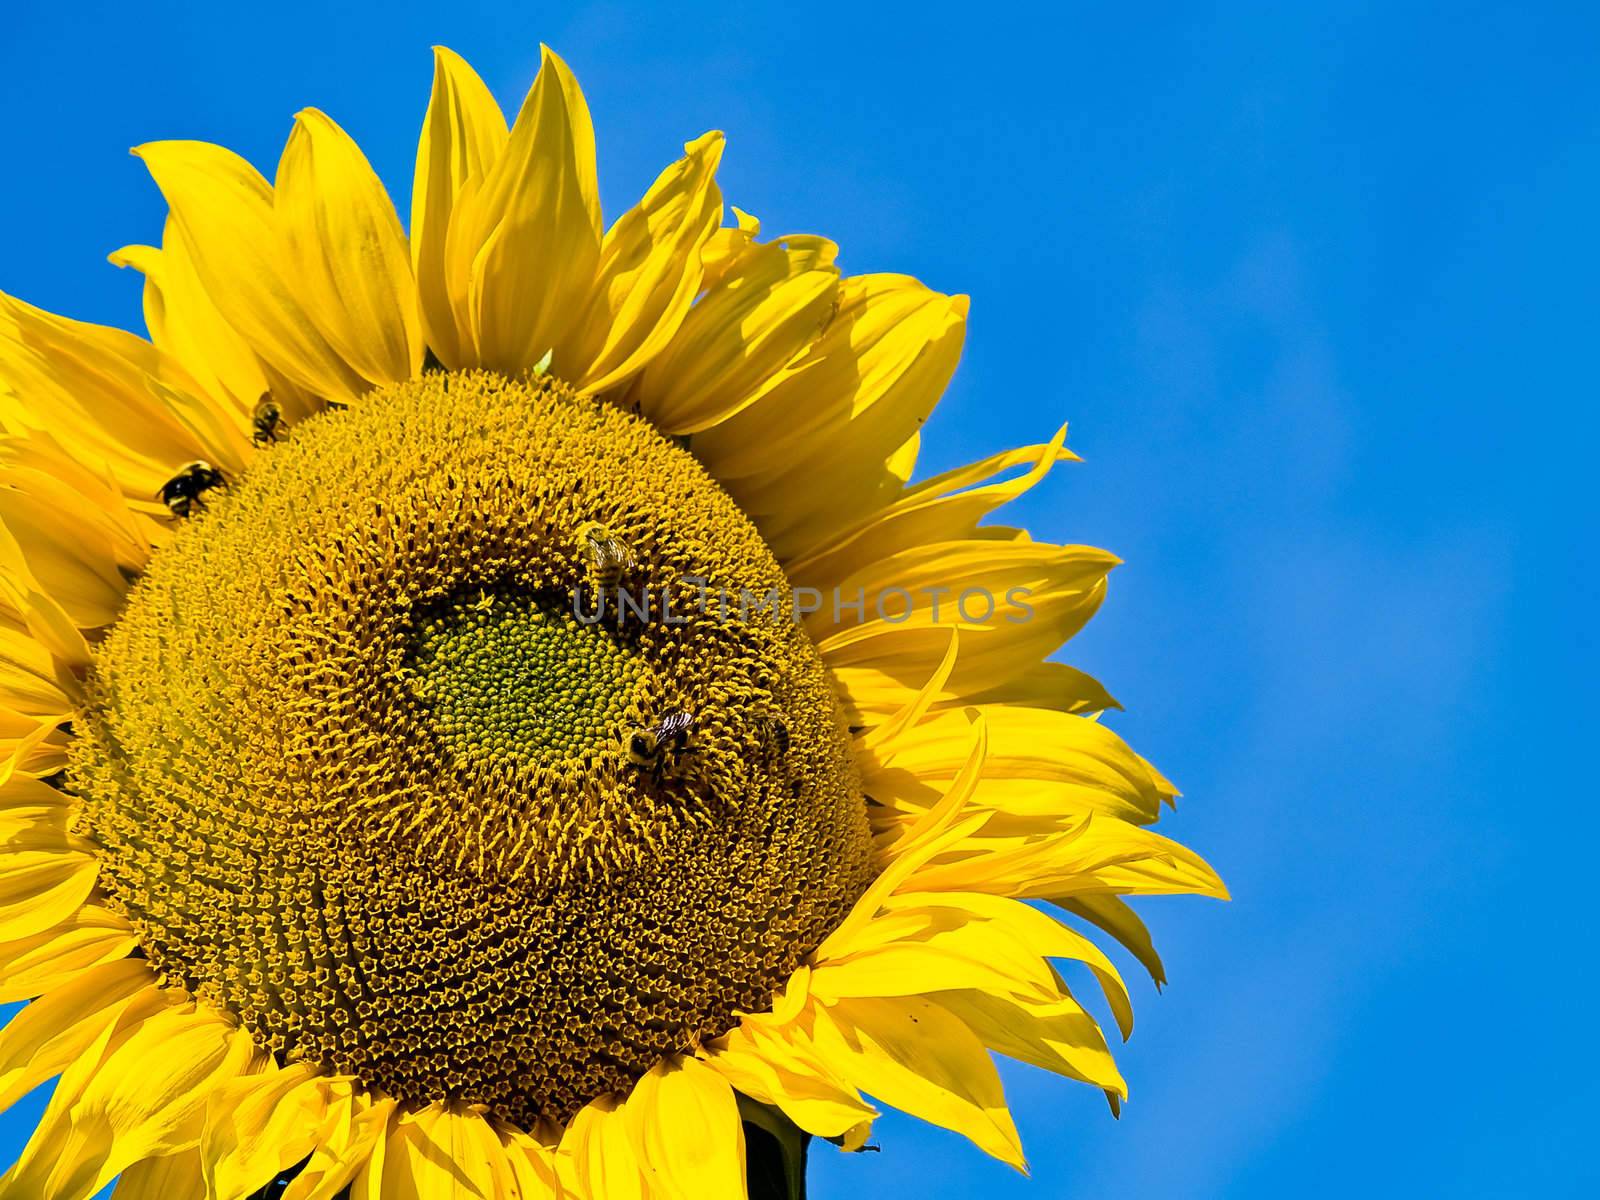 Honeybee Covered in Pollen in a Sunflower